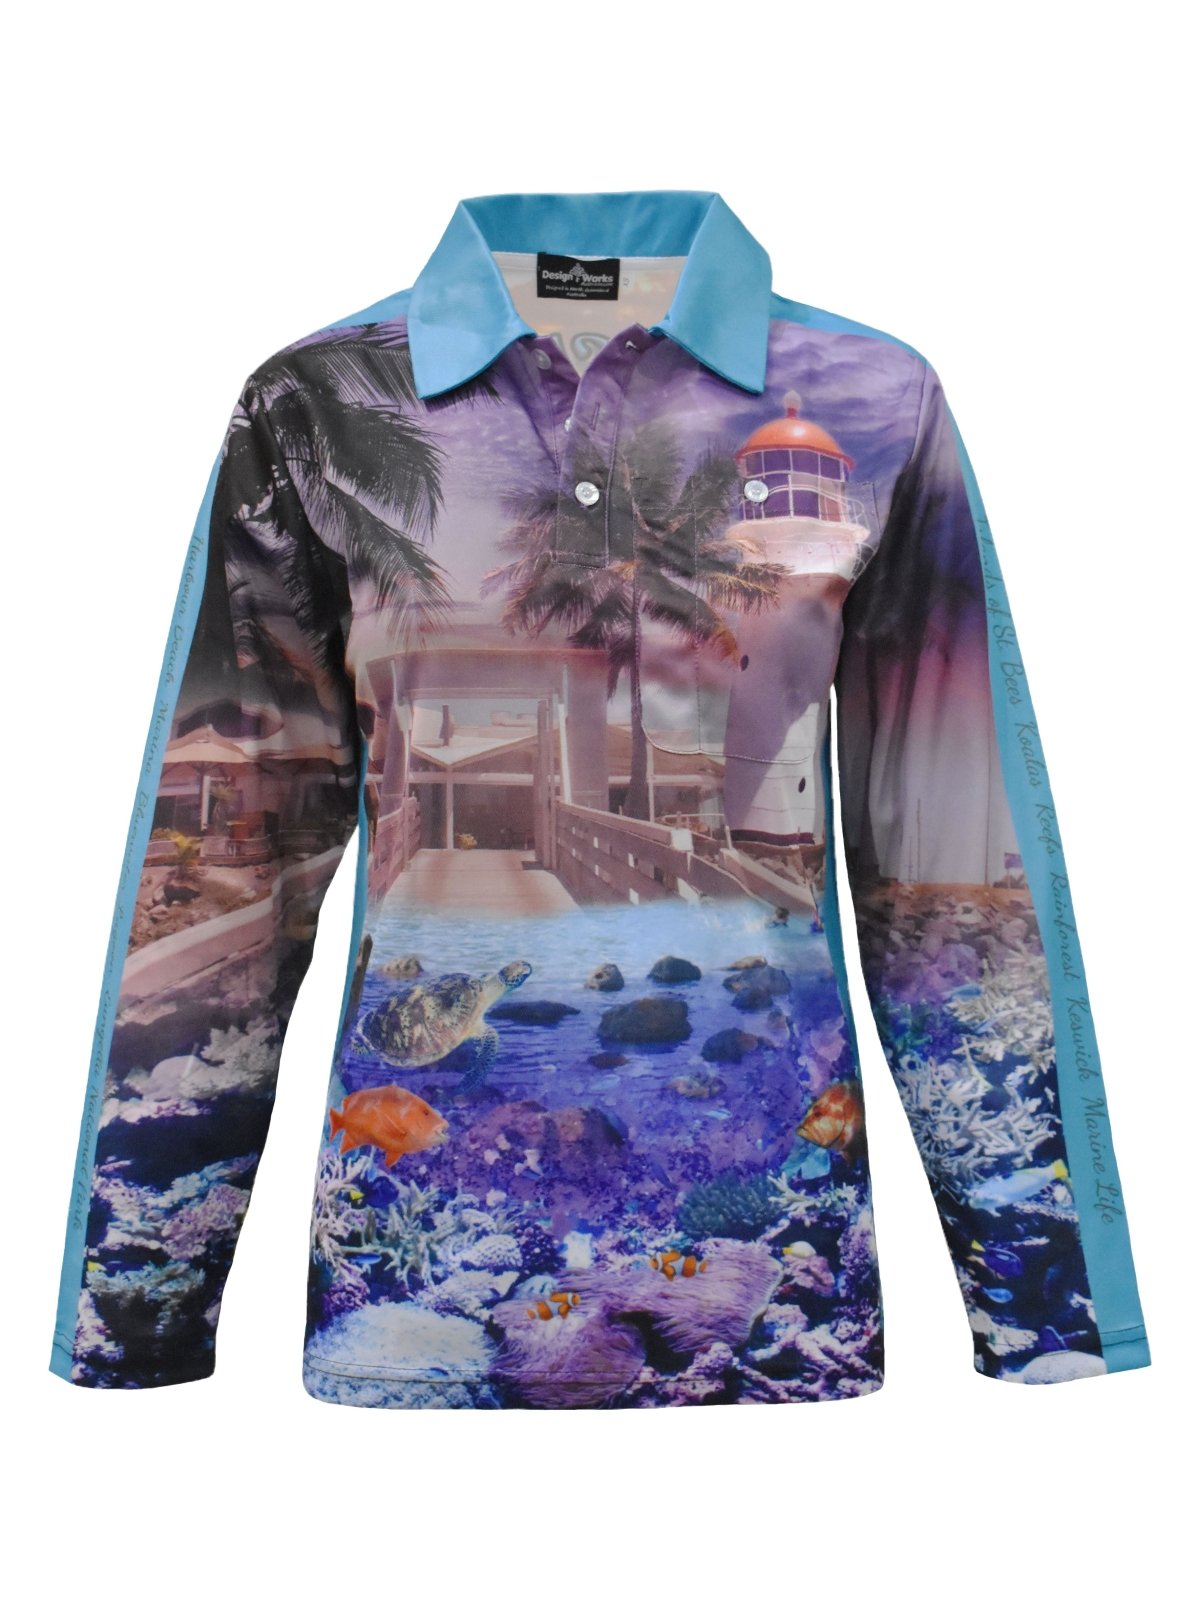 OCEAN COAST FISHING SHIRT  Clothes design, Fishing shirts, Outfits